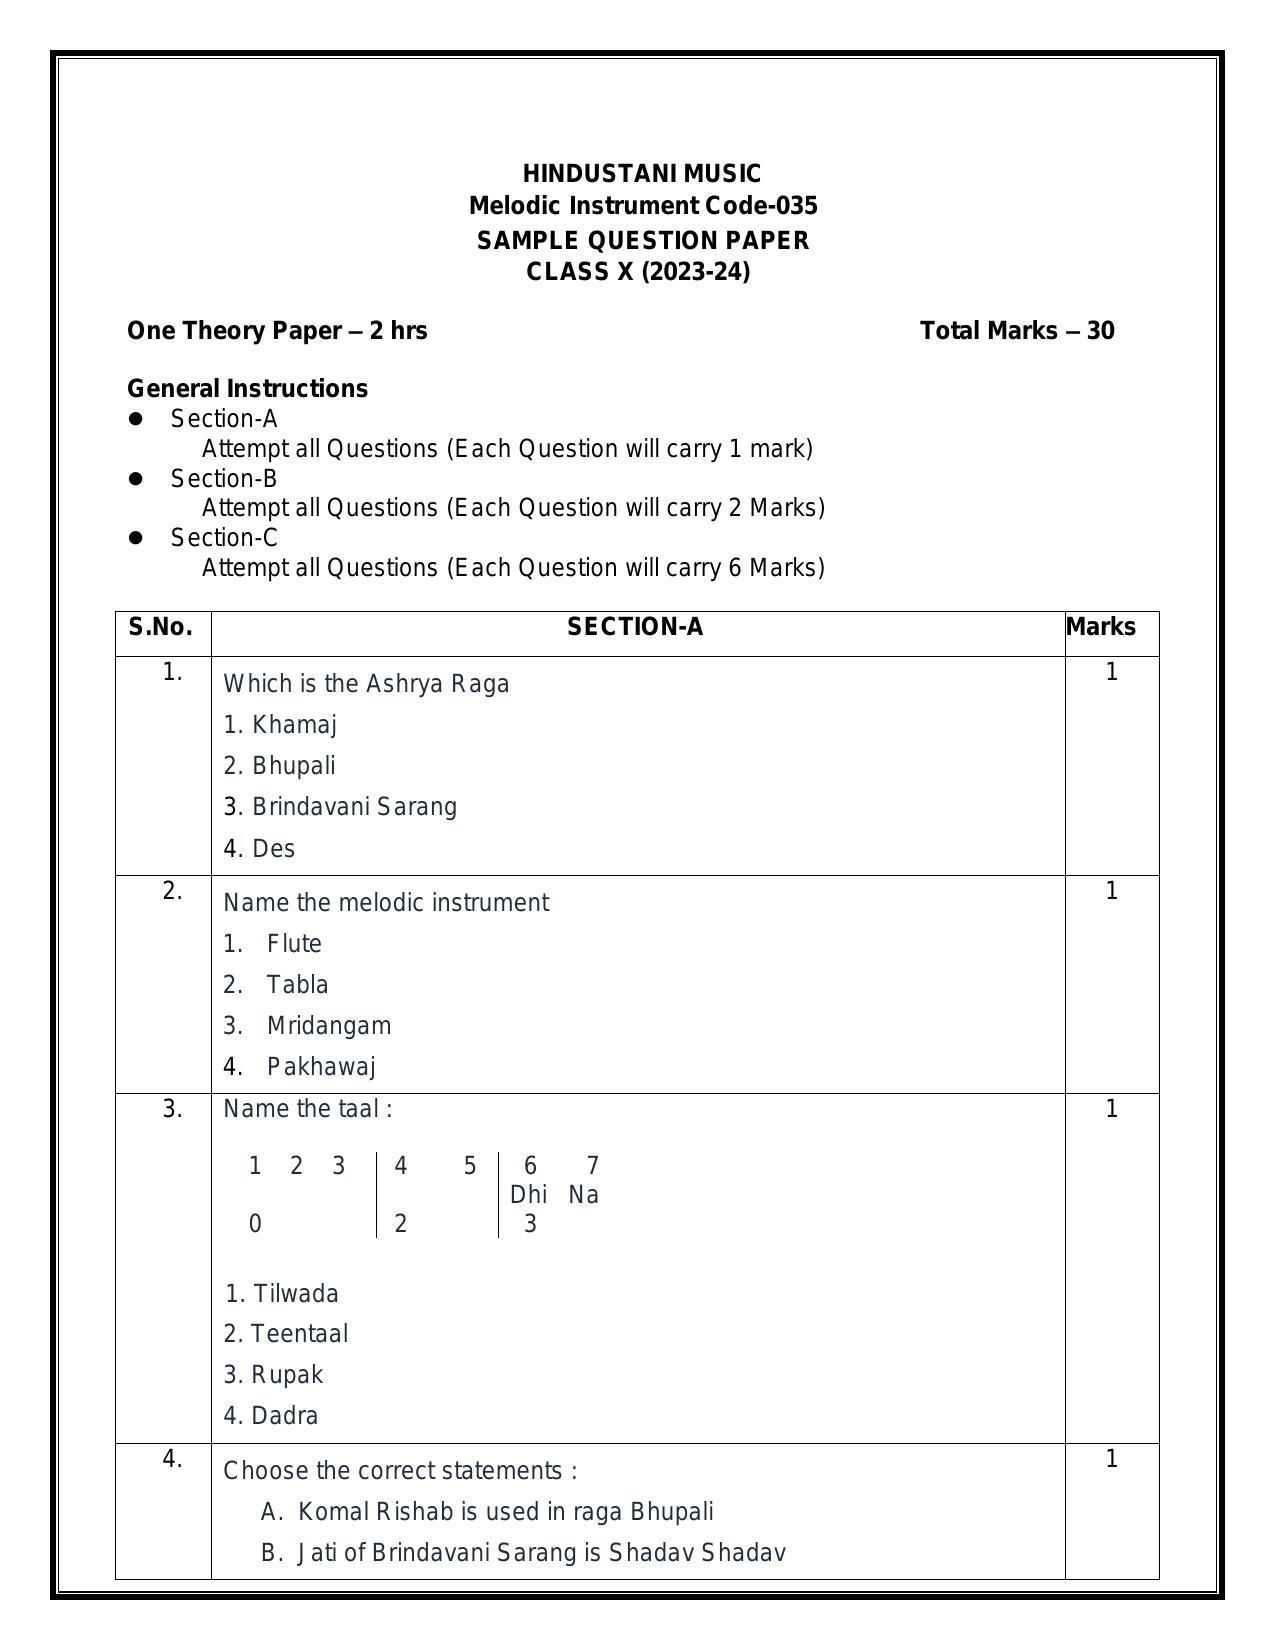 CBSE Class 10 Hindustani Music (Melodic) Sample Paper 2024 - Page 1